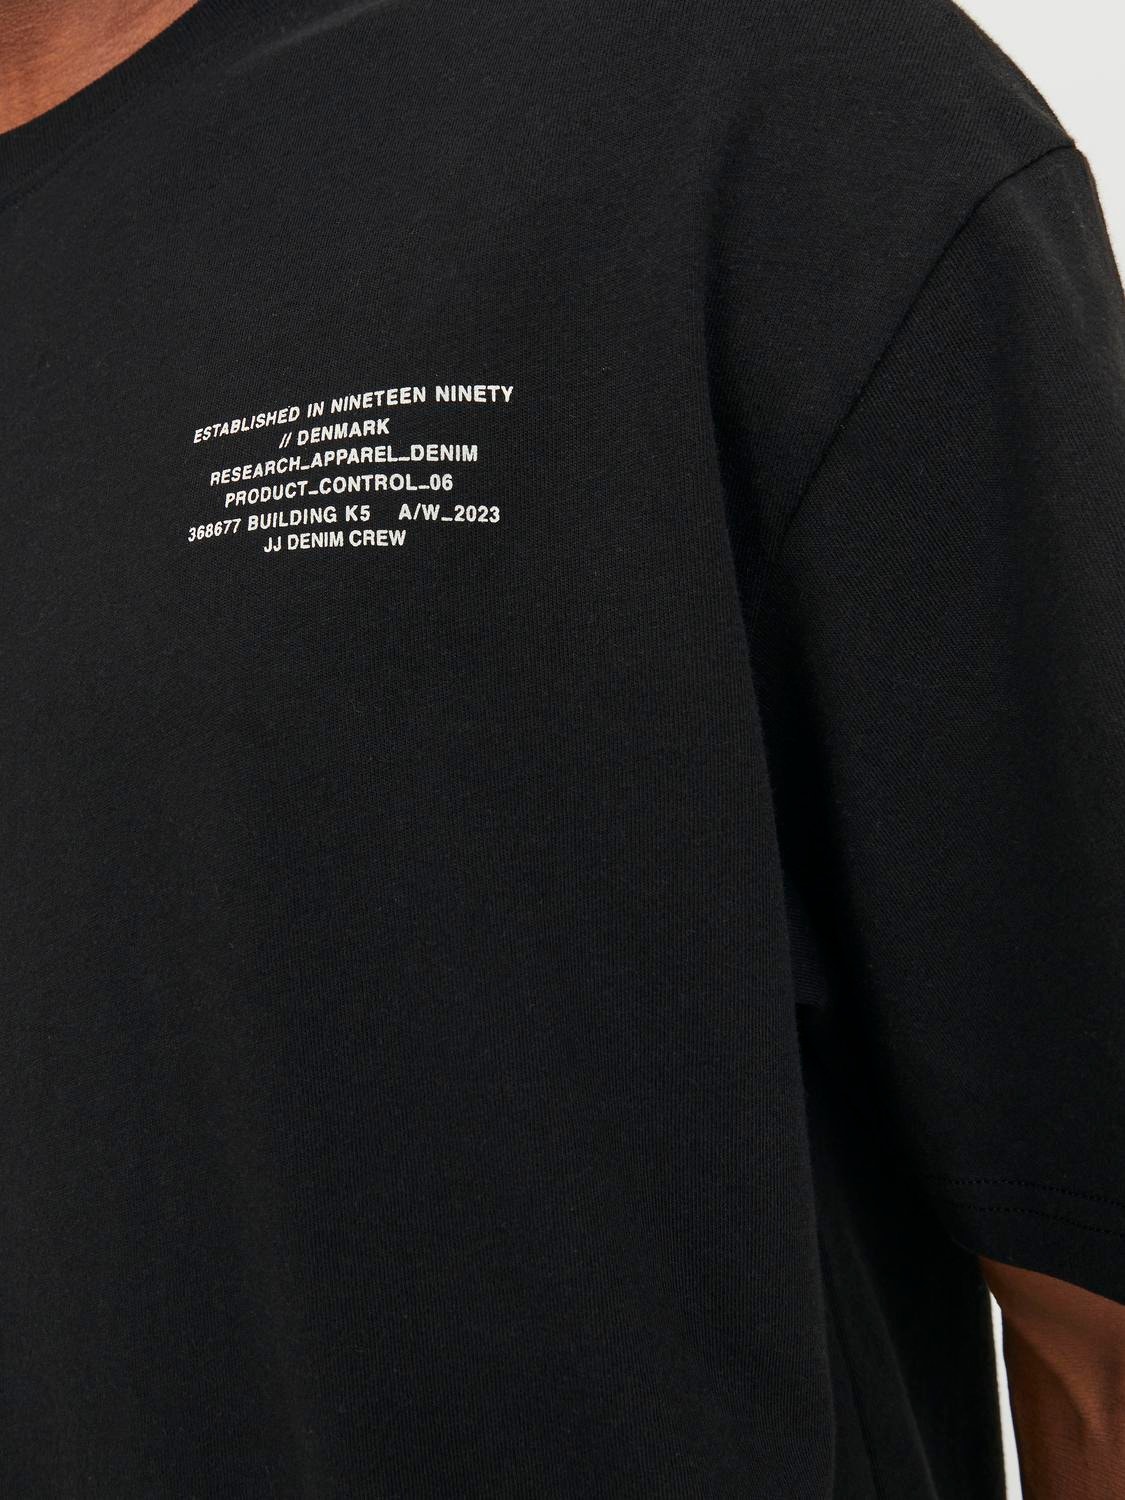 Jack & Jones T-shirt Estampar Decote Redondo -Black - 12250651